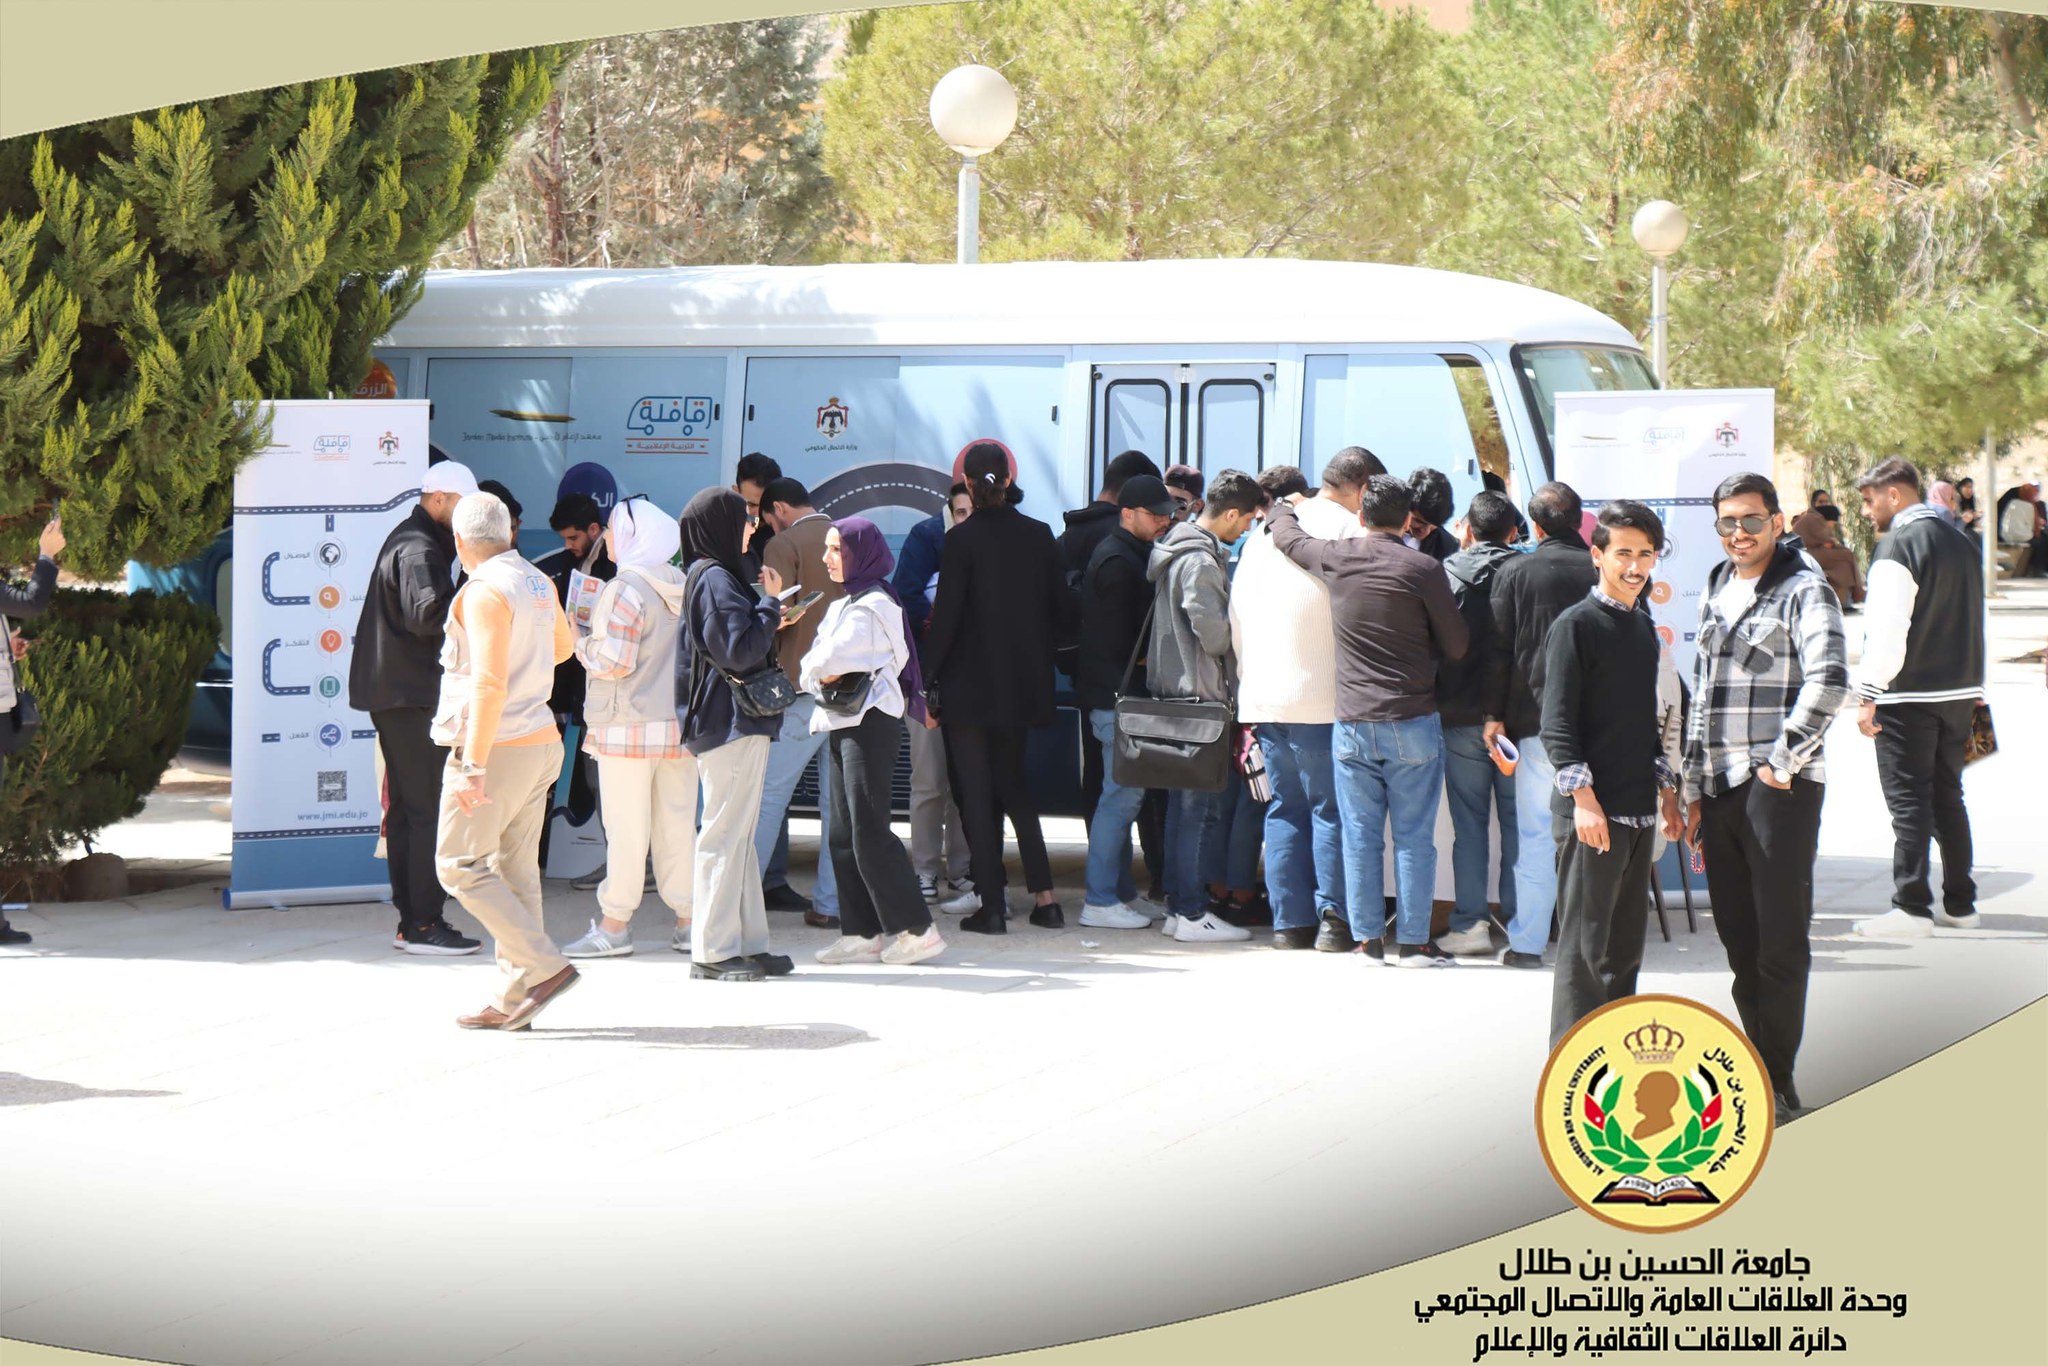 The media education convoy visits Al-Hussein bin Talal University